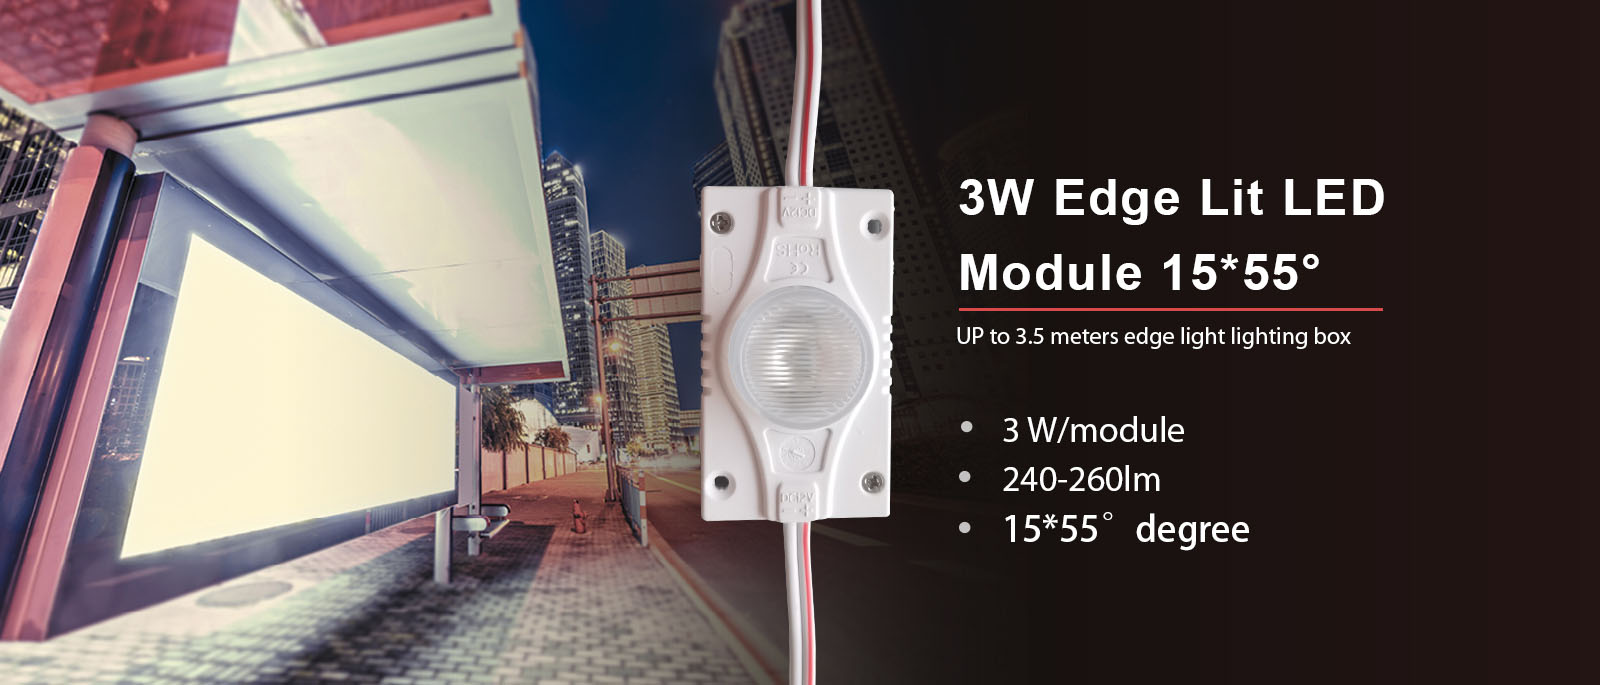 3W Edge Lit LED